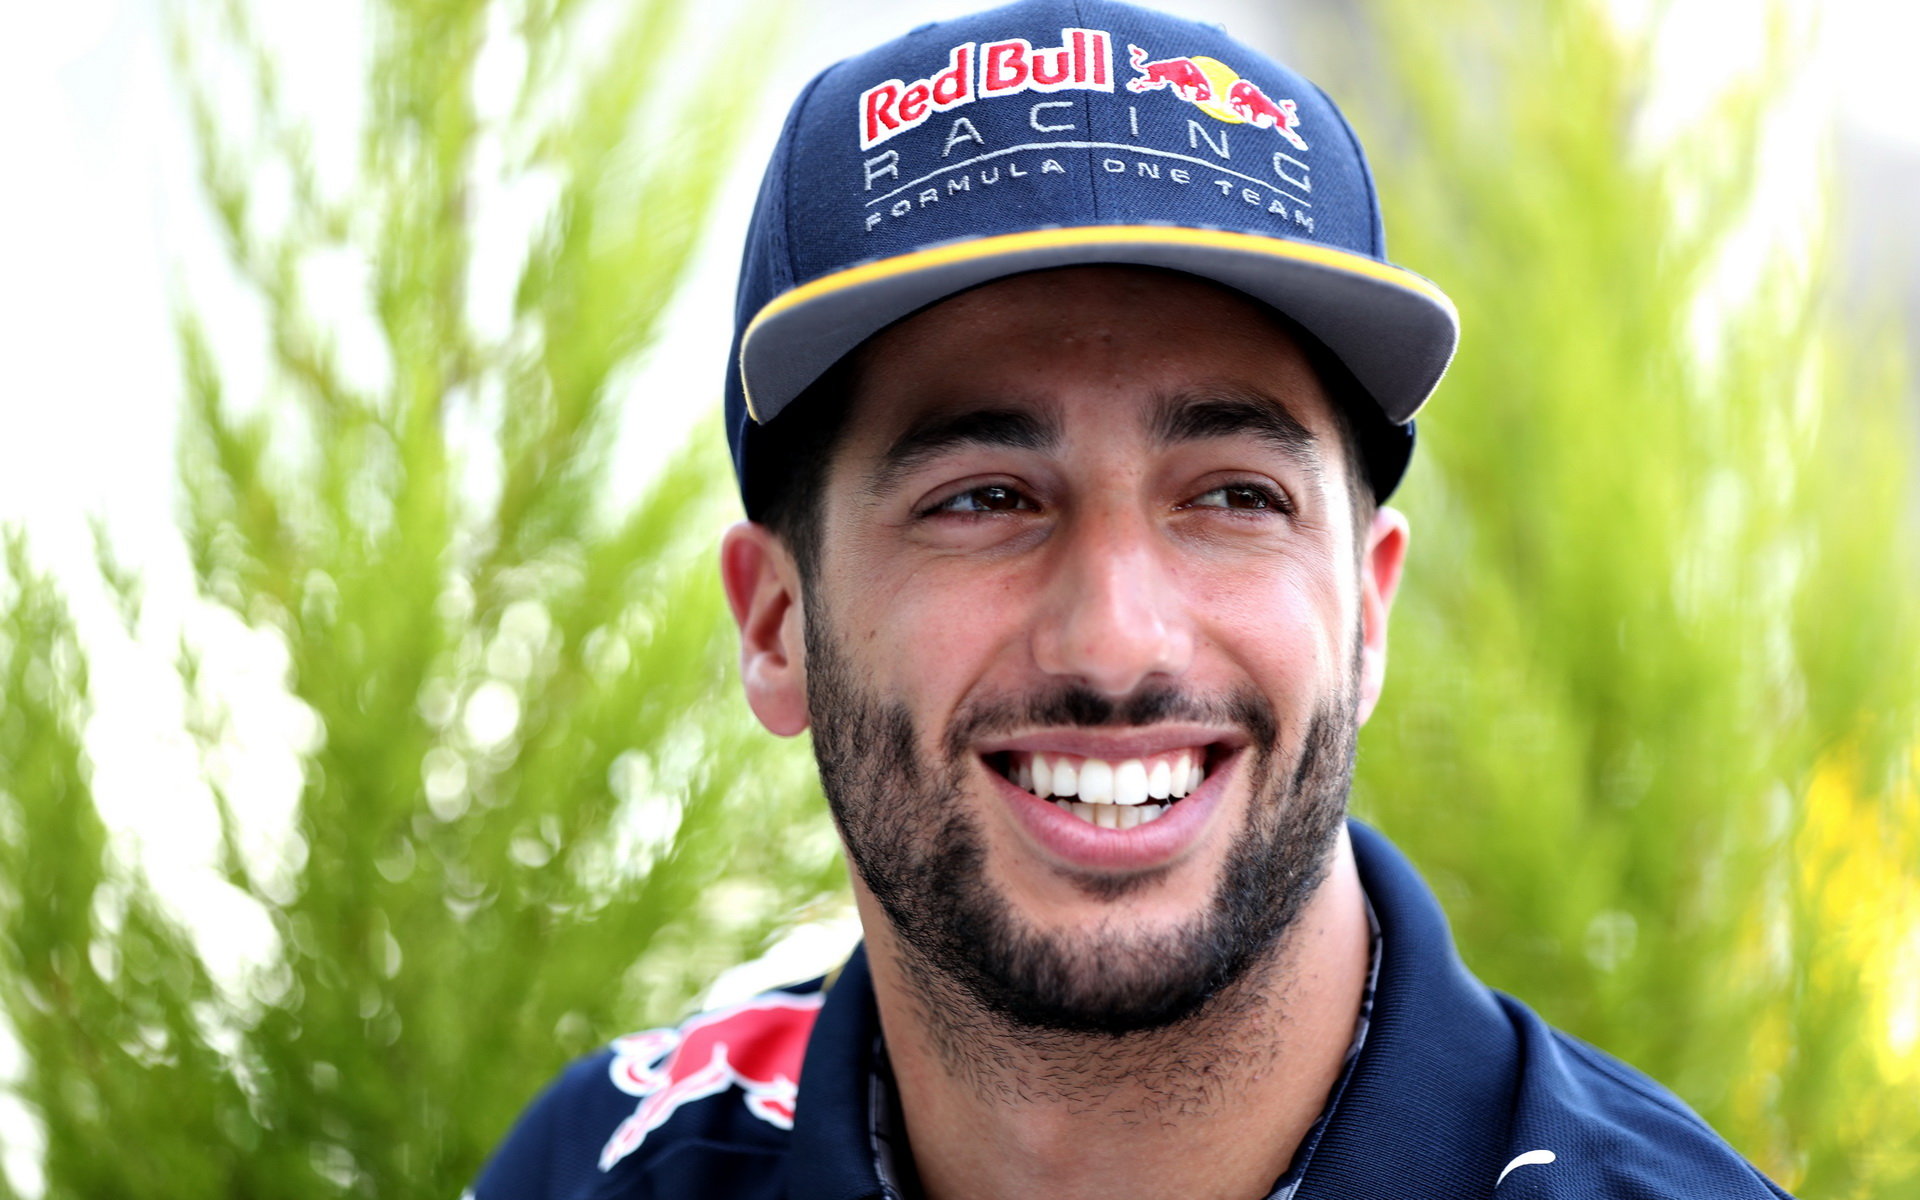 Daniel Ricciardo v Baku